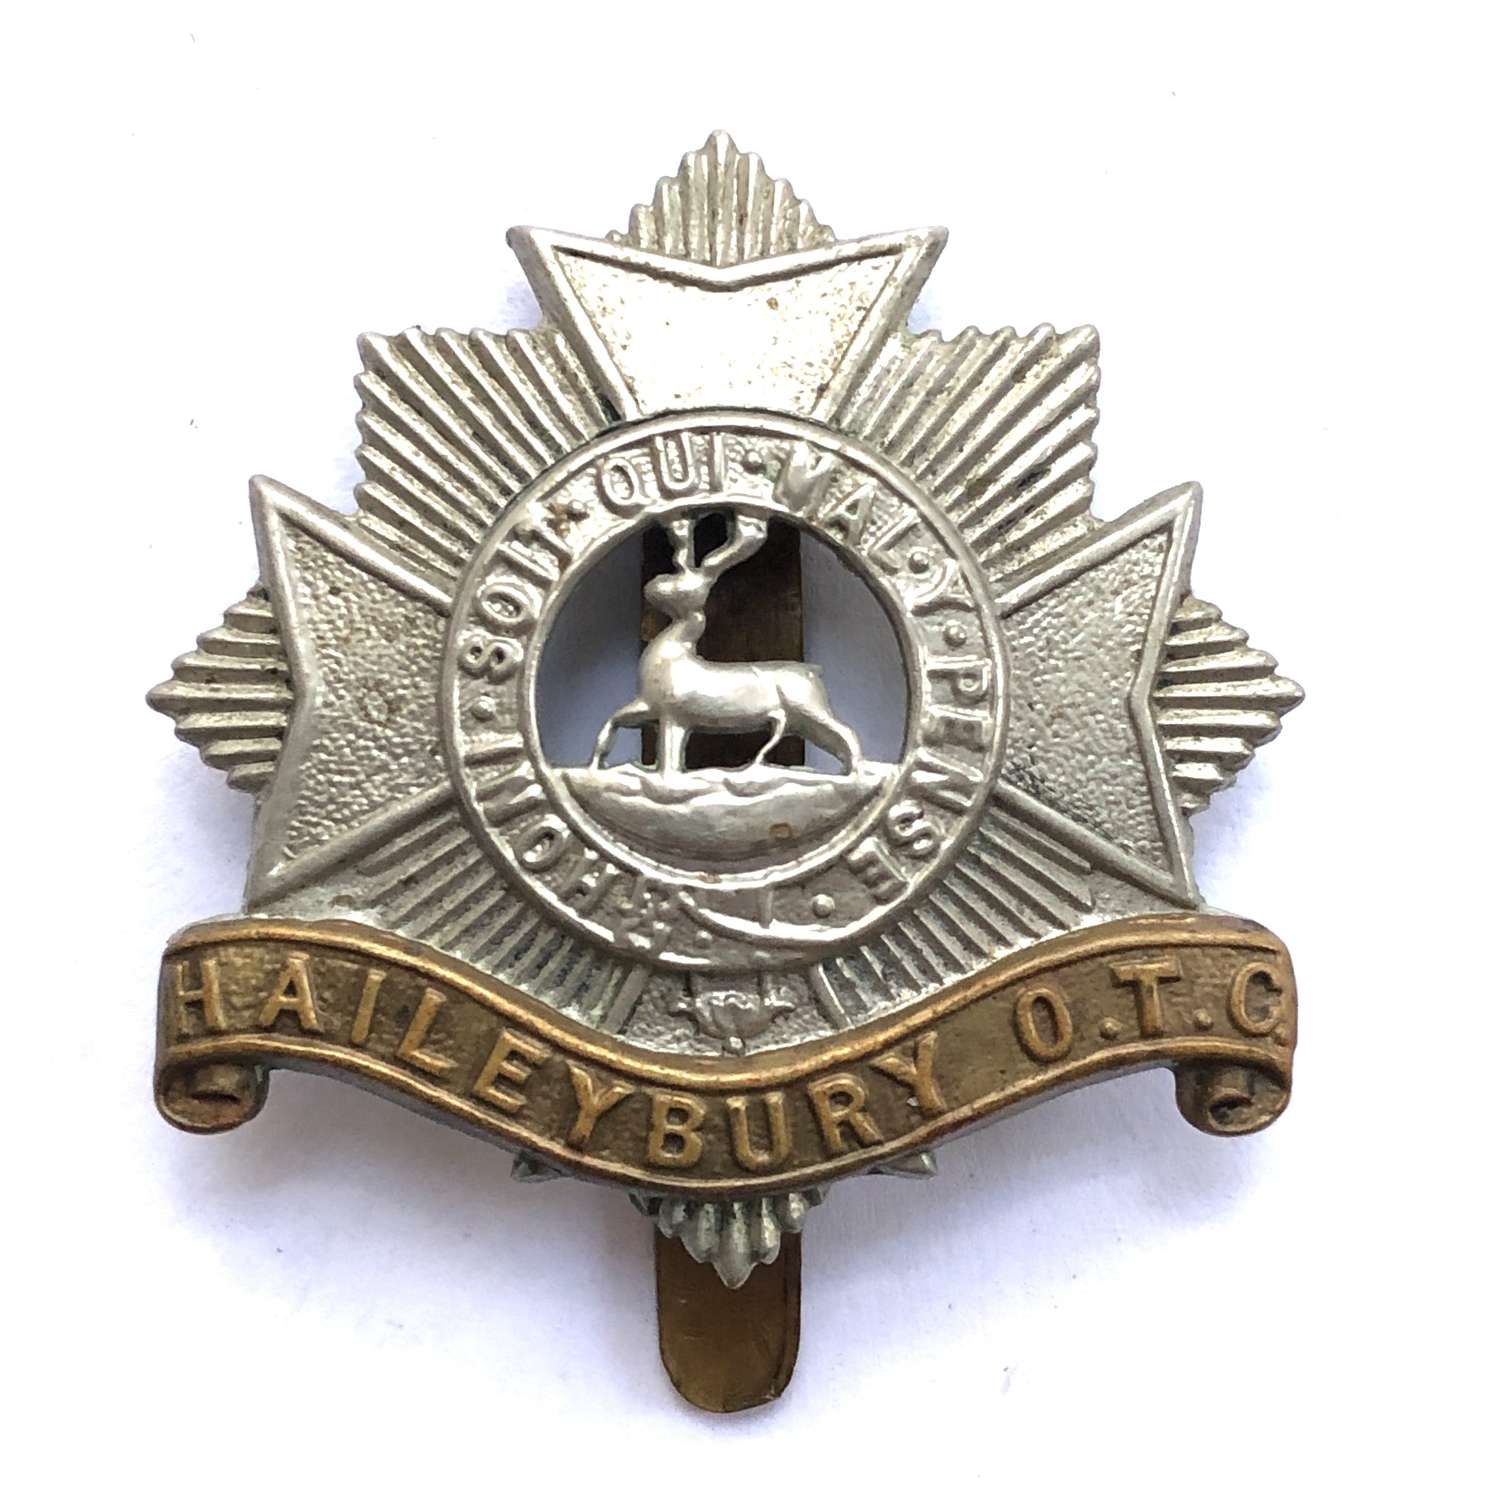 Haileybury OTC pre 1942 cap badge